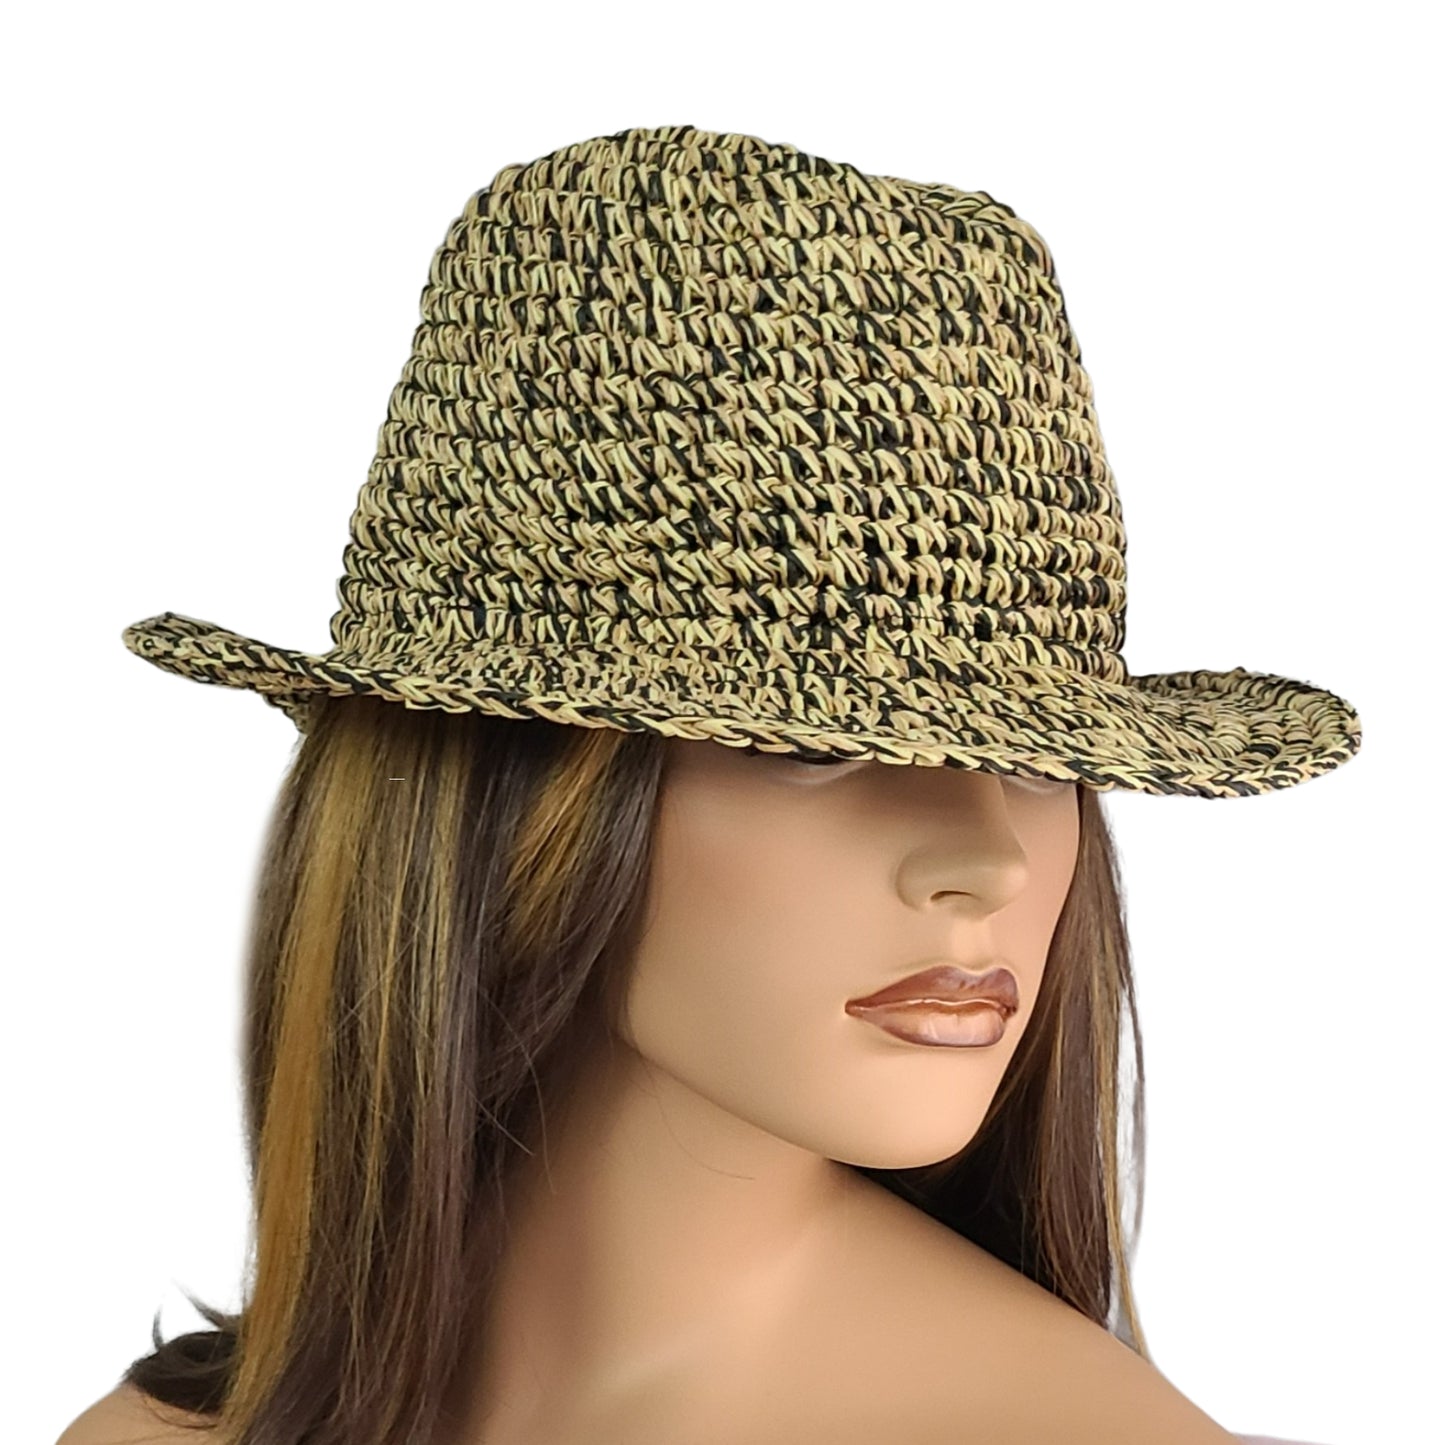 ASOS DESIGN Mixed Woven Straw Fedora Hat